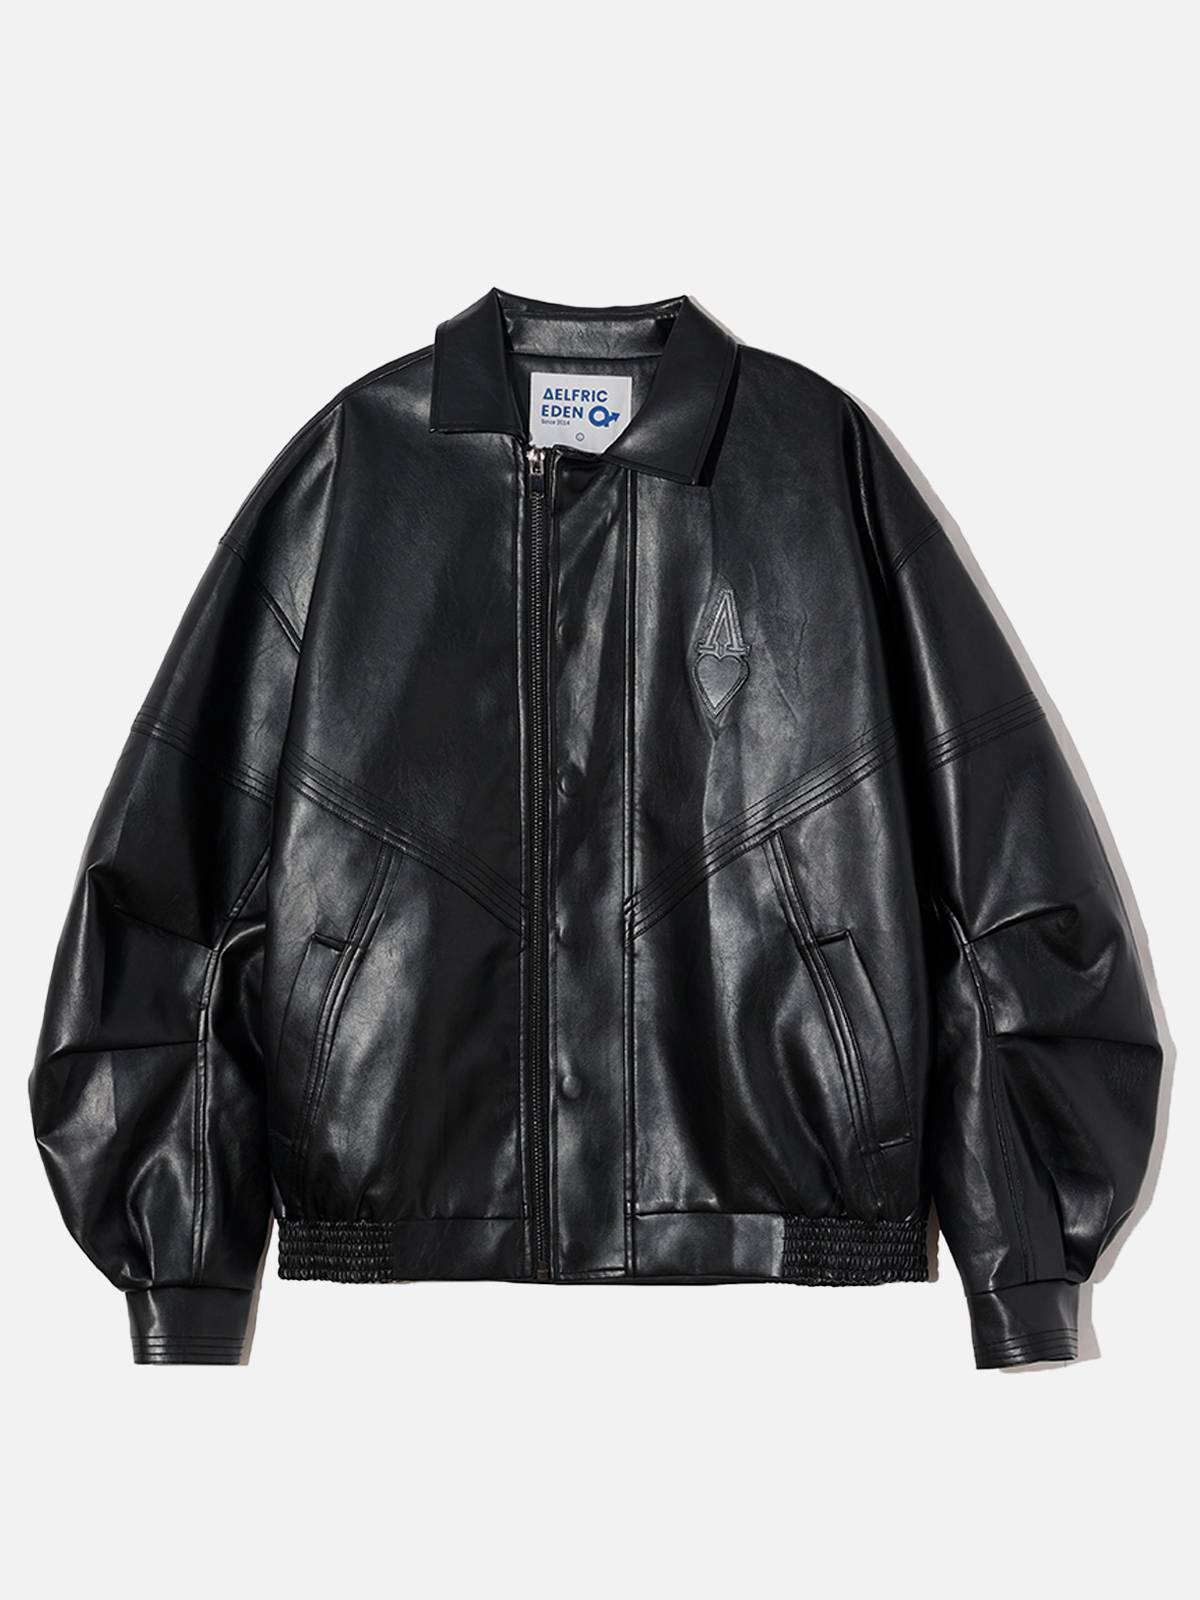 retro zipup leather jacket edgy & chic streetwear 8714